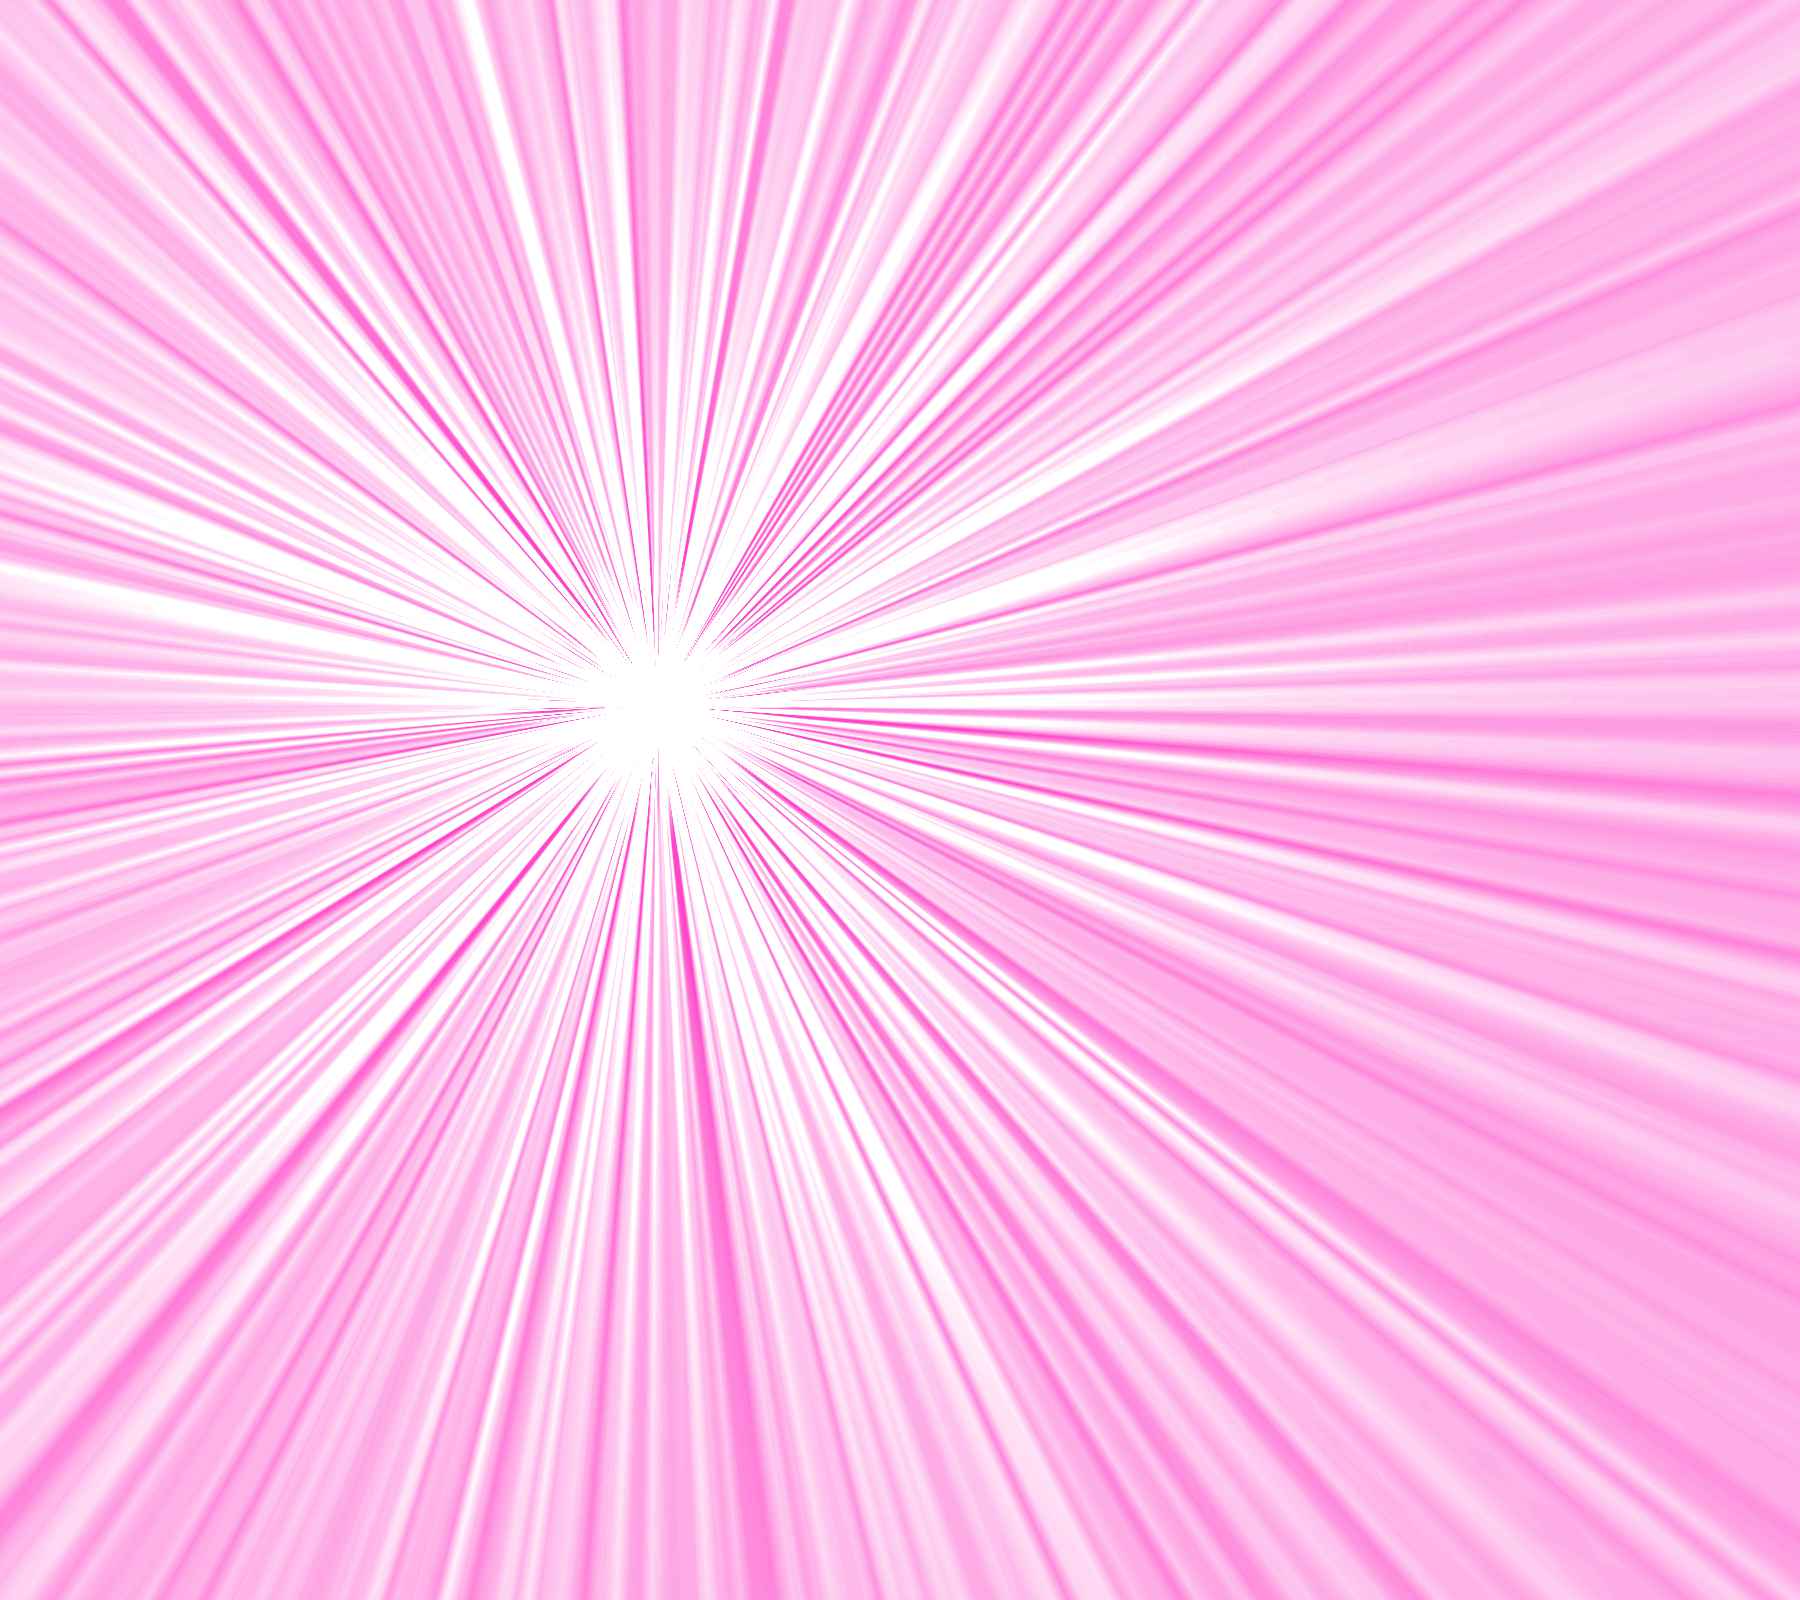 Pink Starburst Radiating Lines Background 1800x1600 Background Image